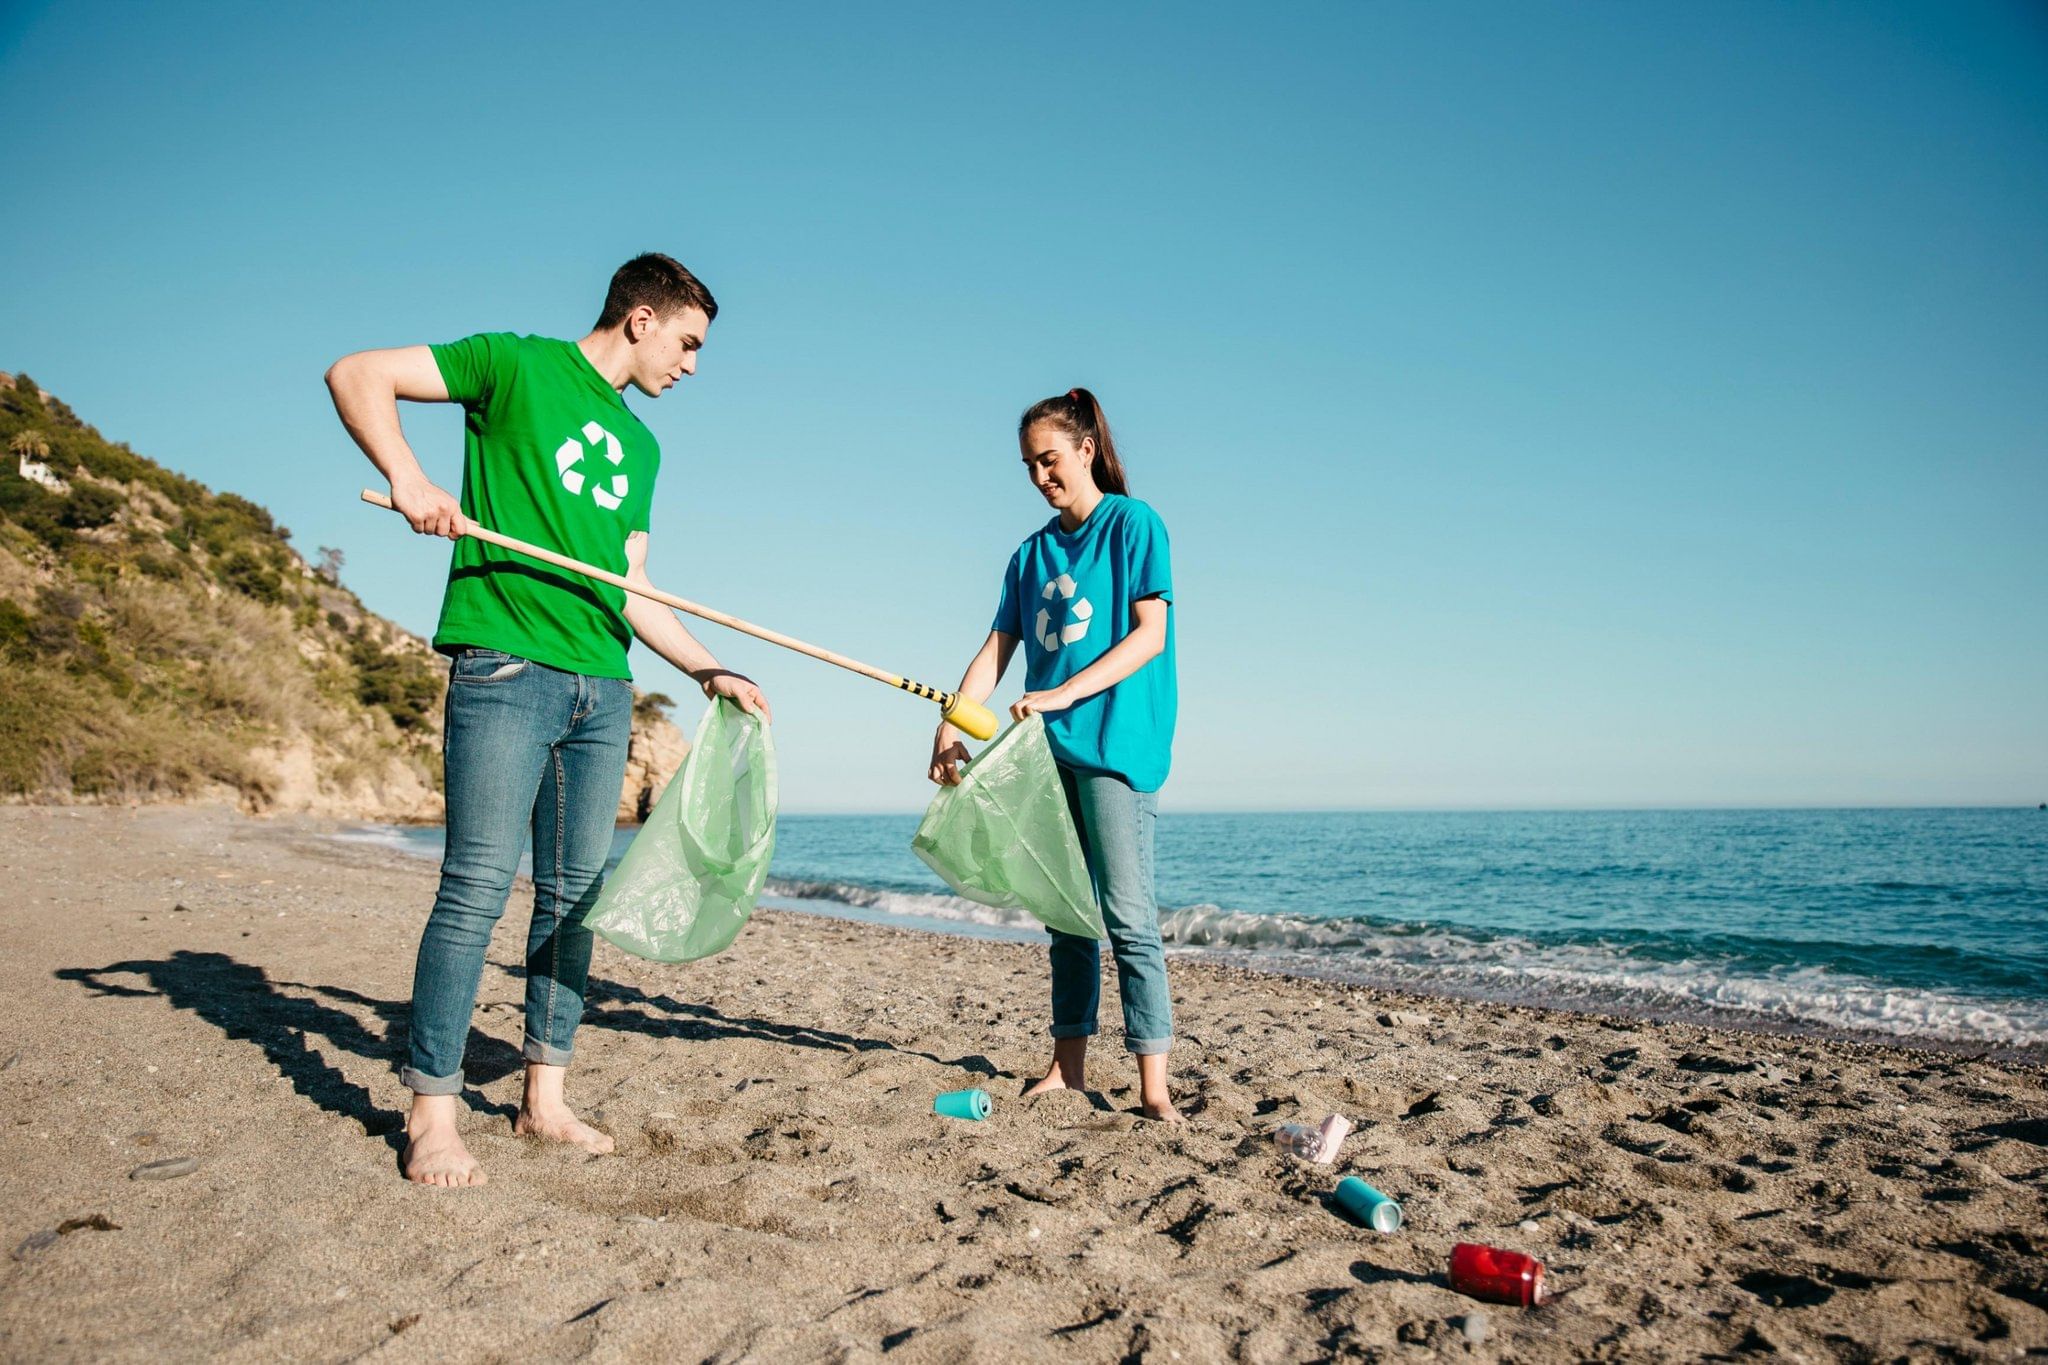 Ecology and people. Волонтеры на пляже. Уборка пляжа.